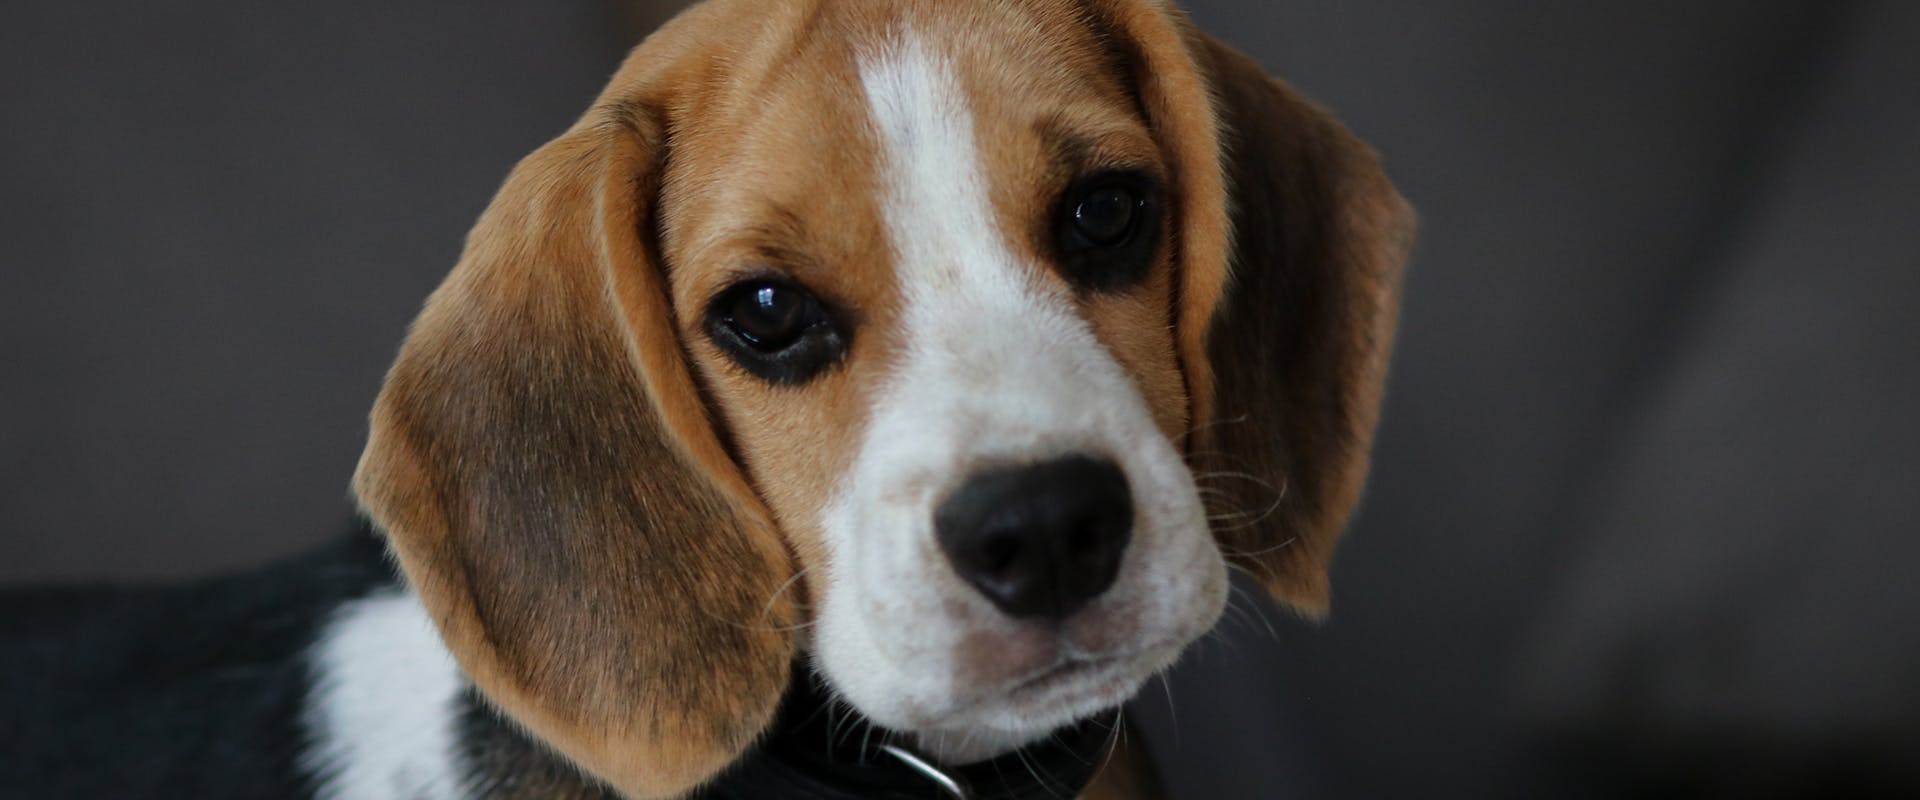 A cute Beagle dog, looking pleadingly at the camera